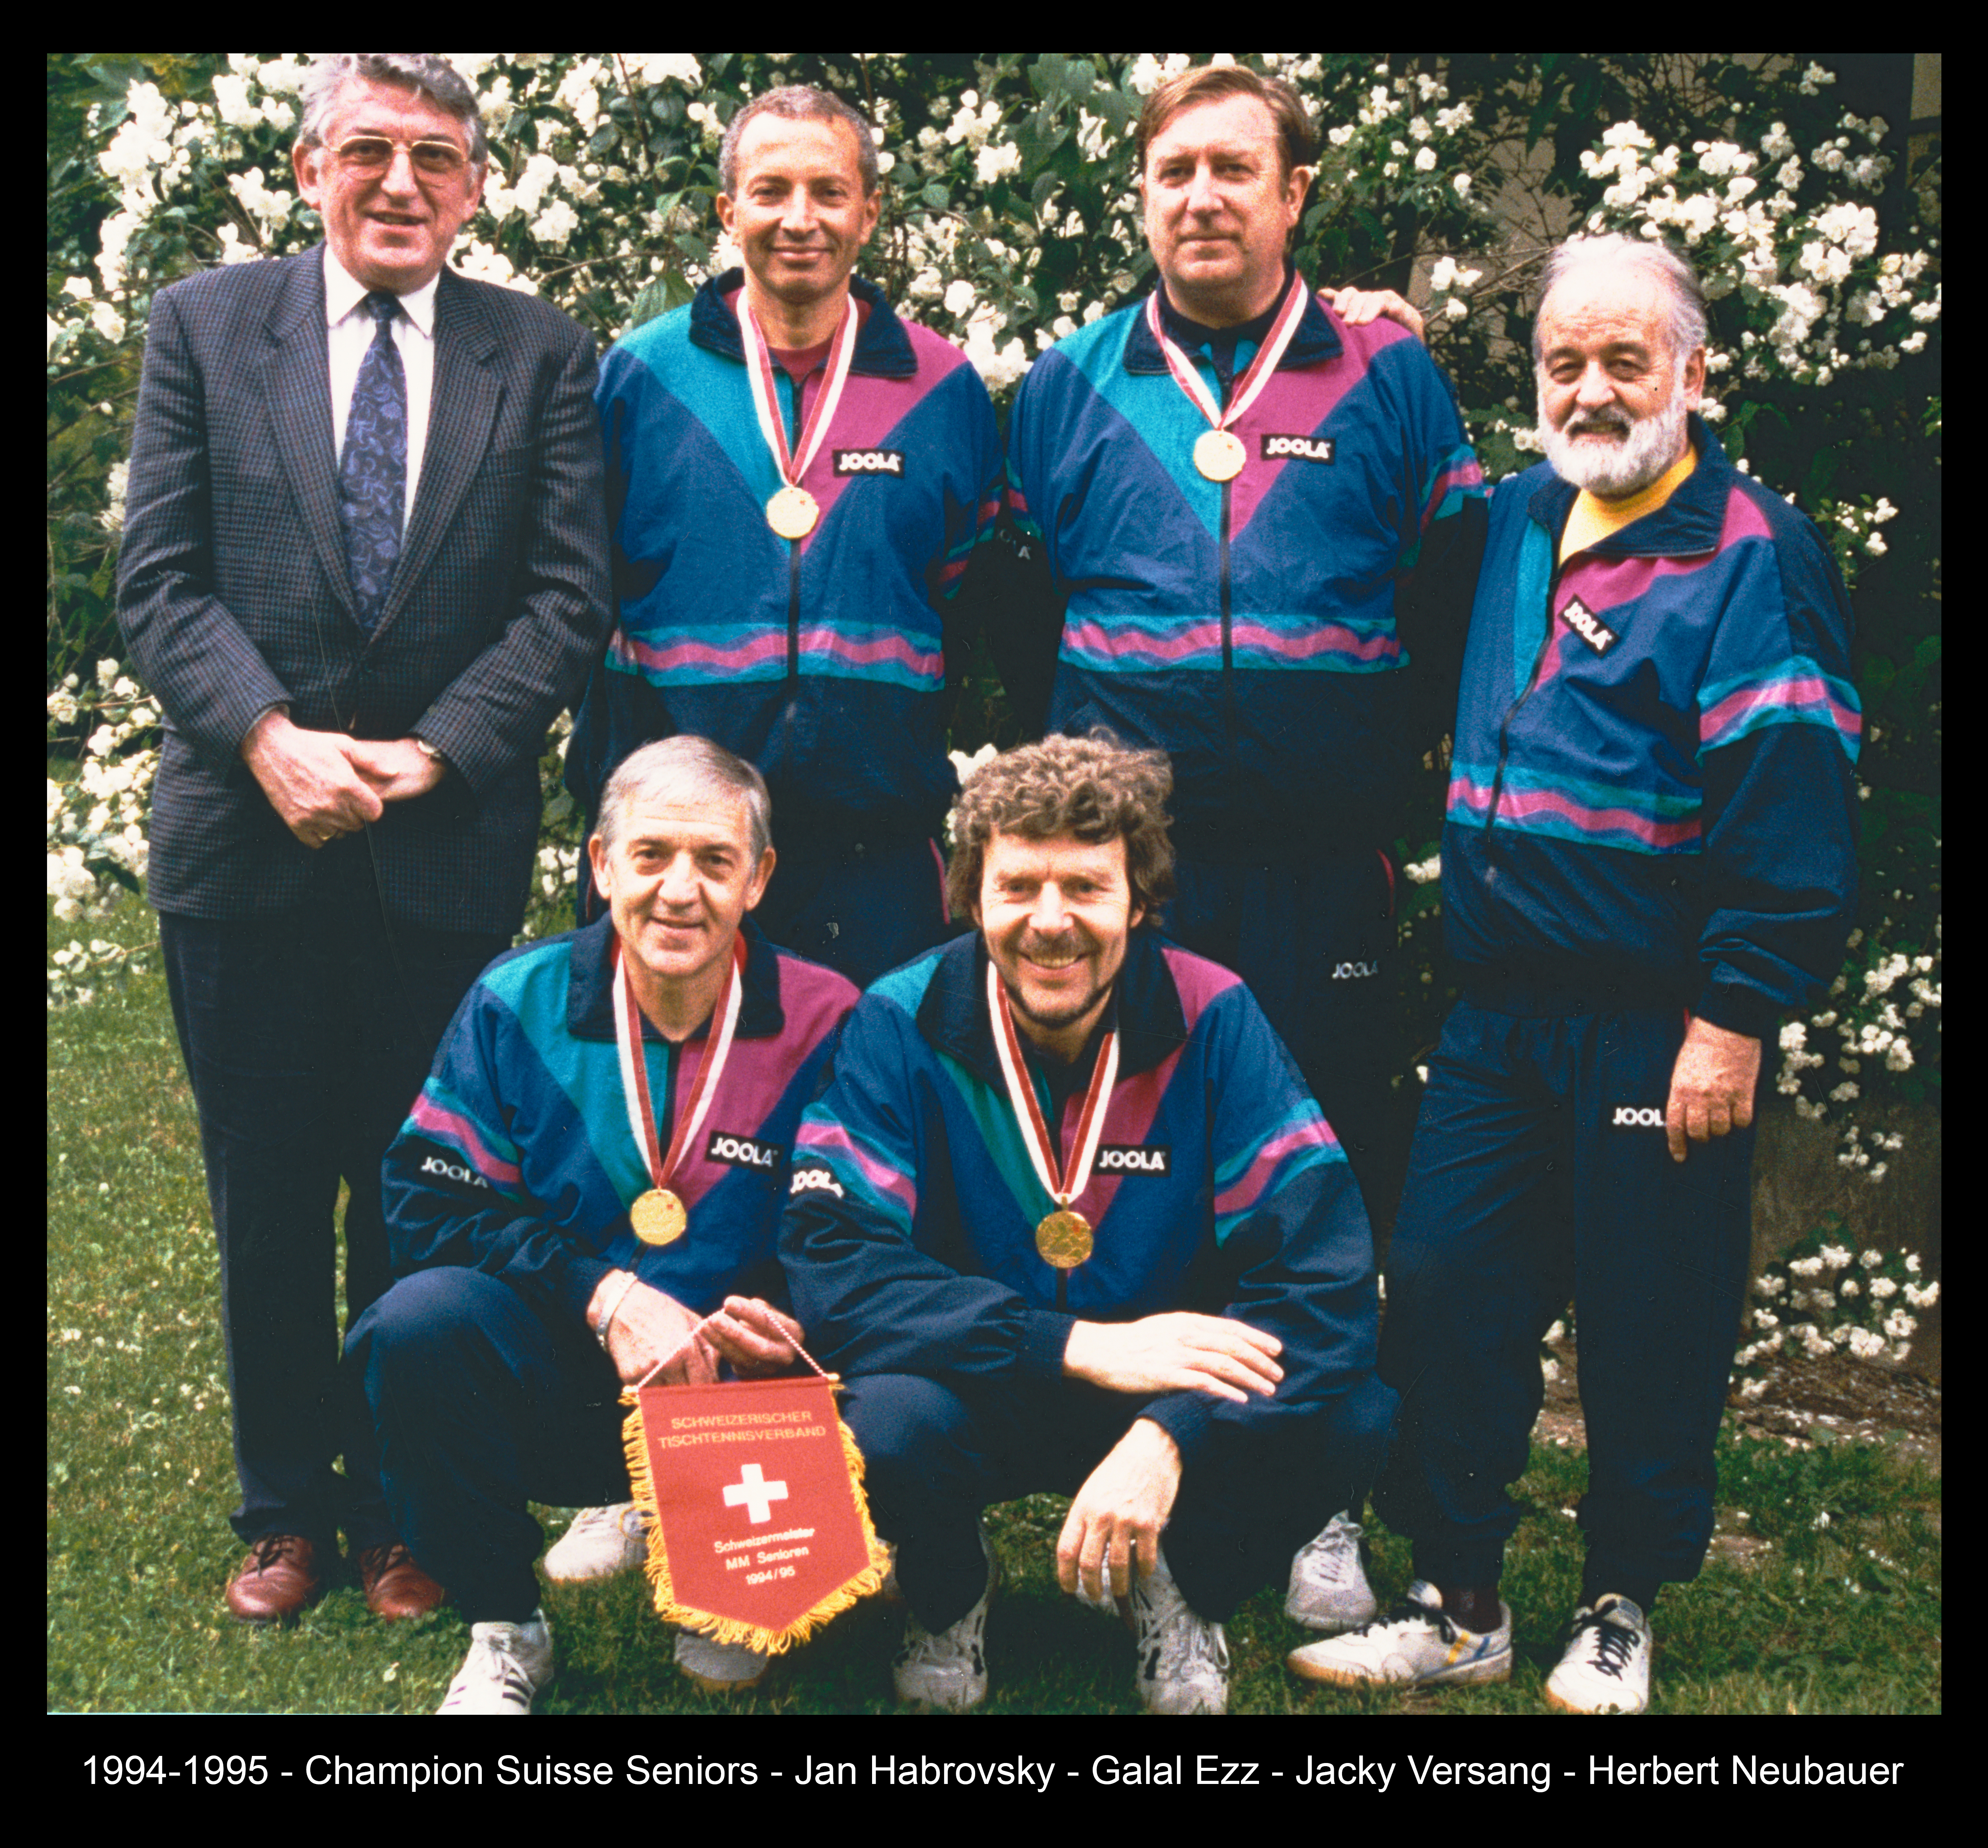 1994-1995 - Champion Suisse Seniors - Jan Habrovsky - Galal Ezz - Jacky Versang - Herbert Neubauer